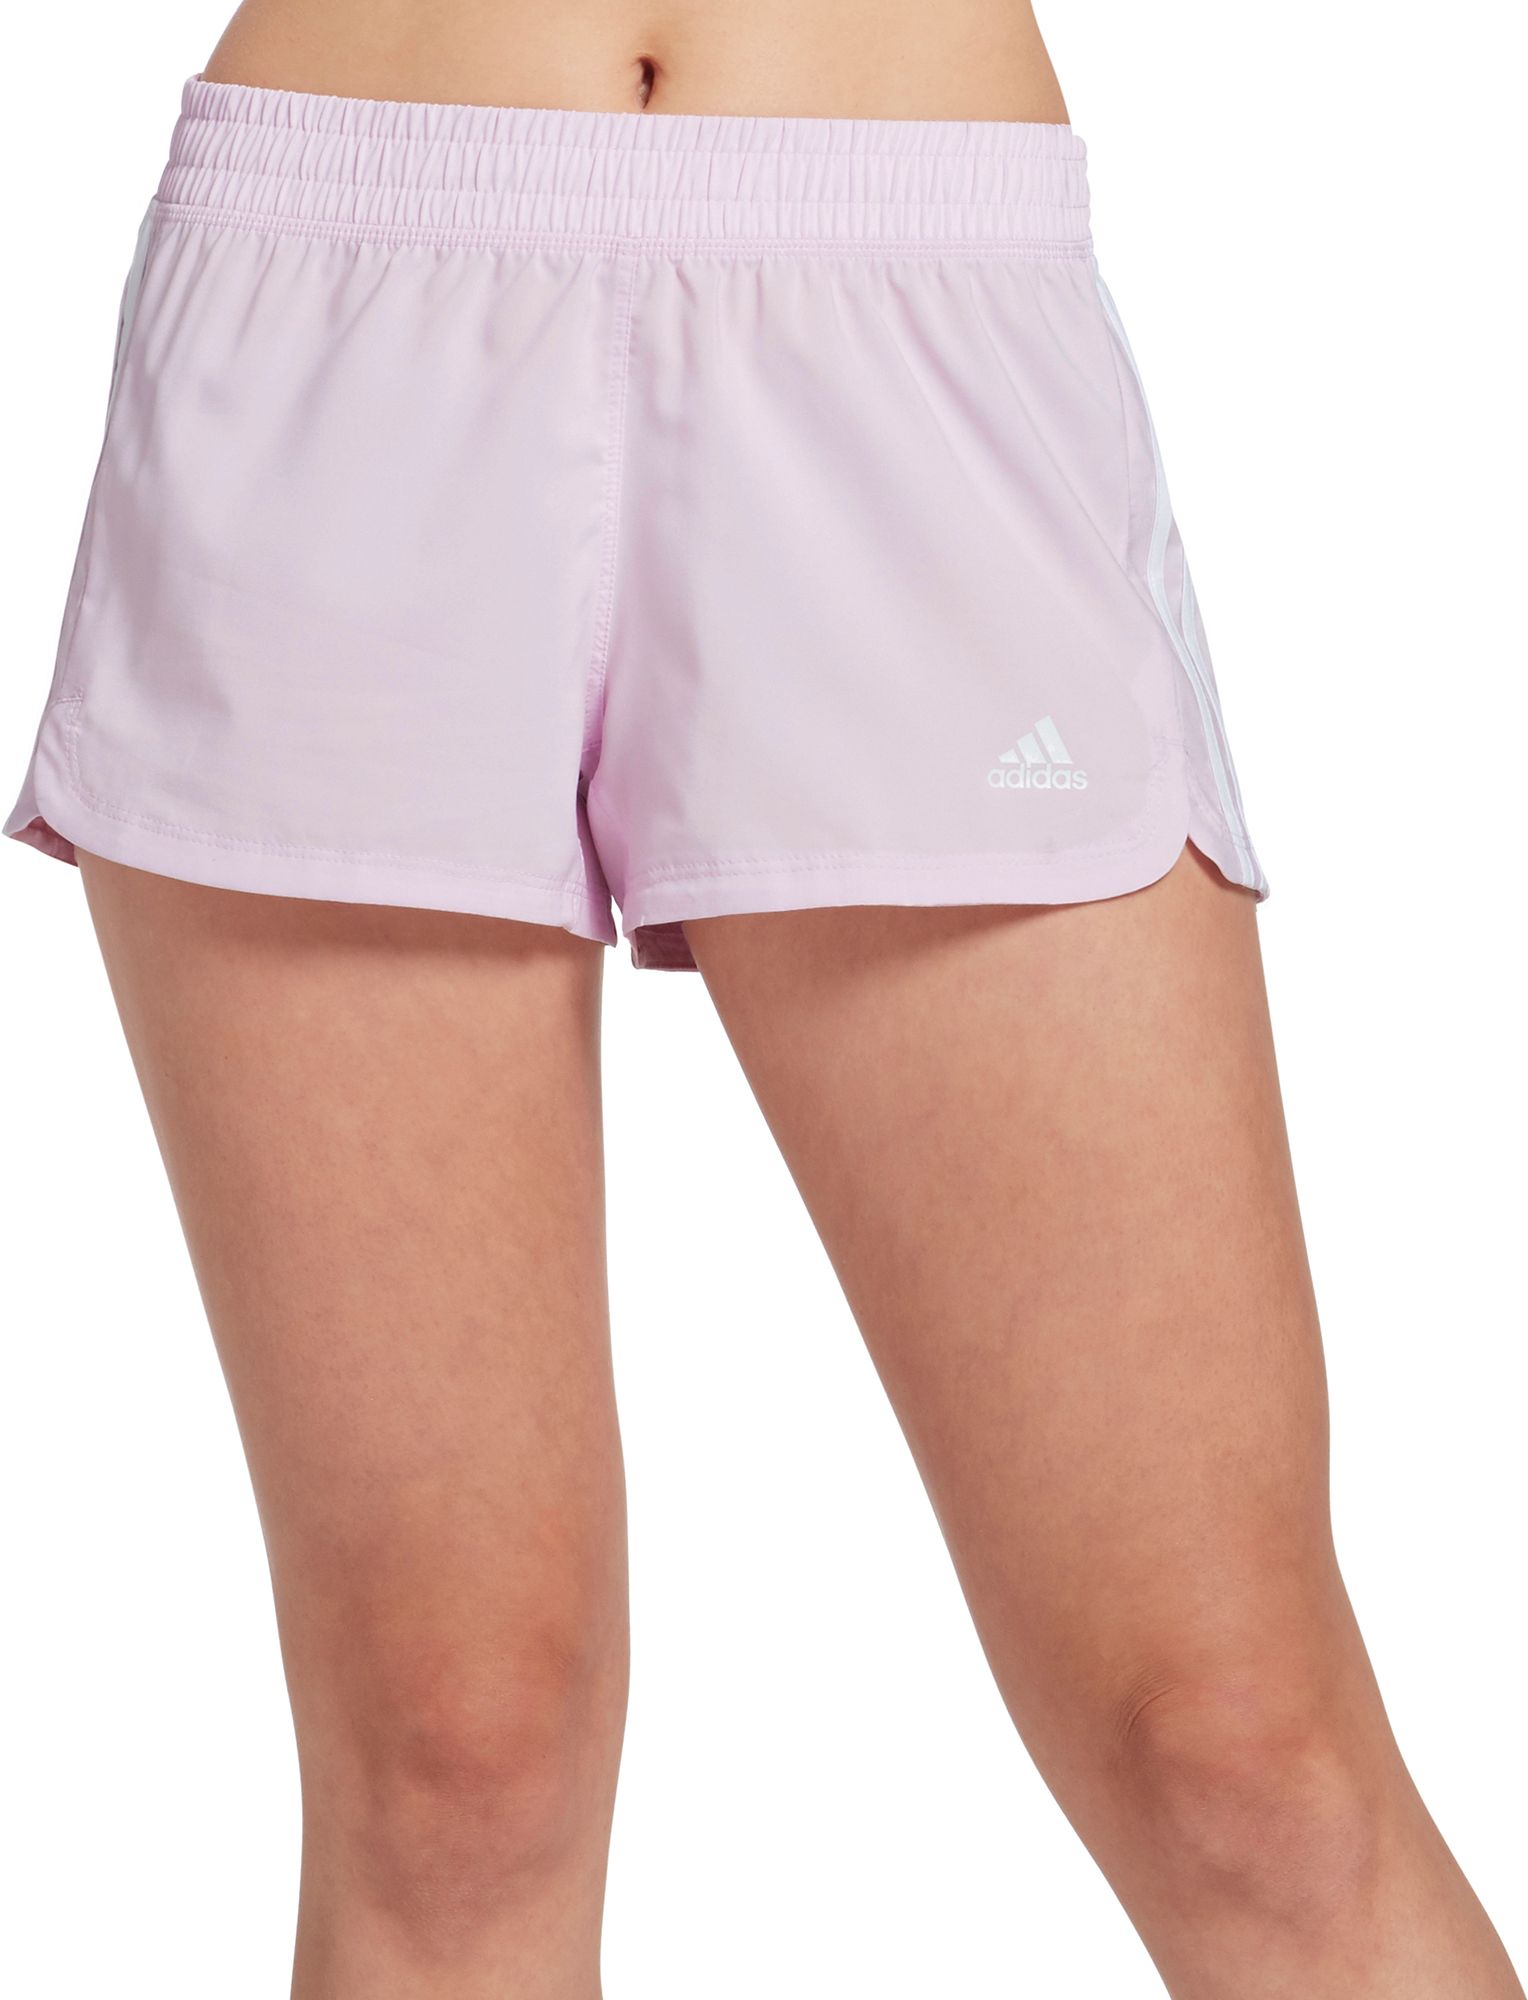 cotton adidas shorts womens